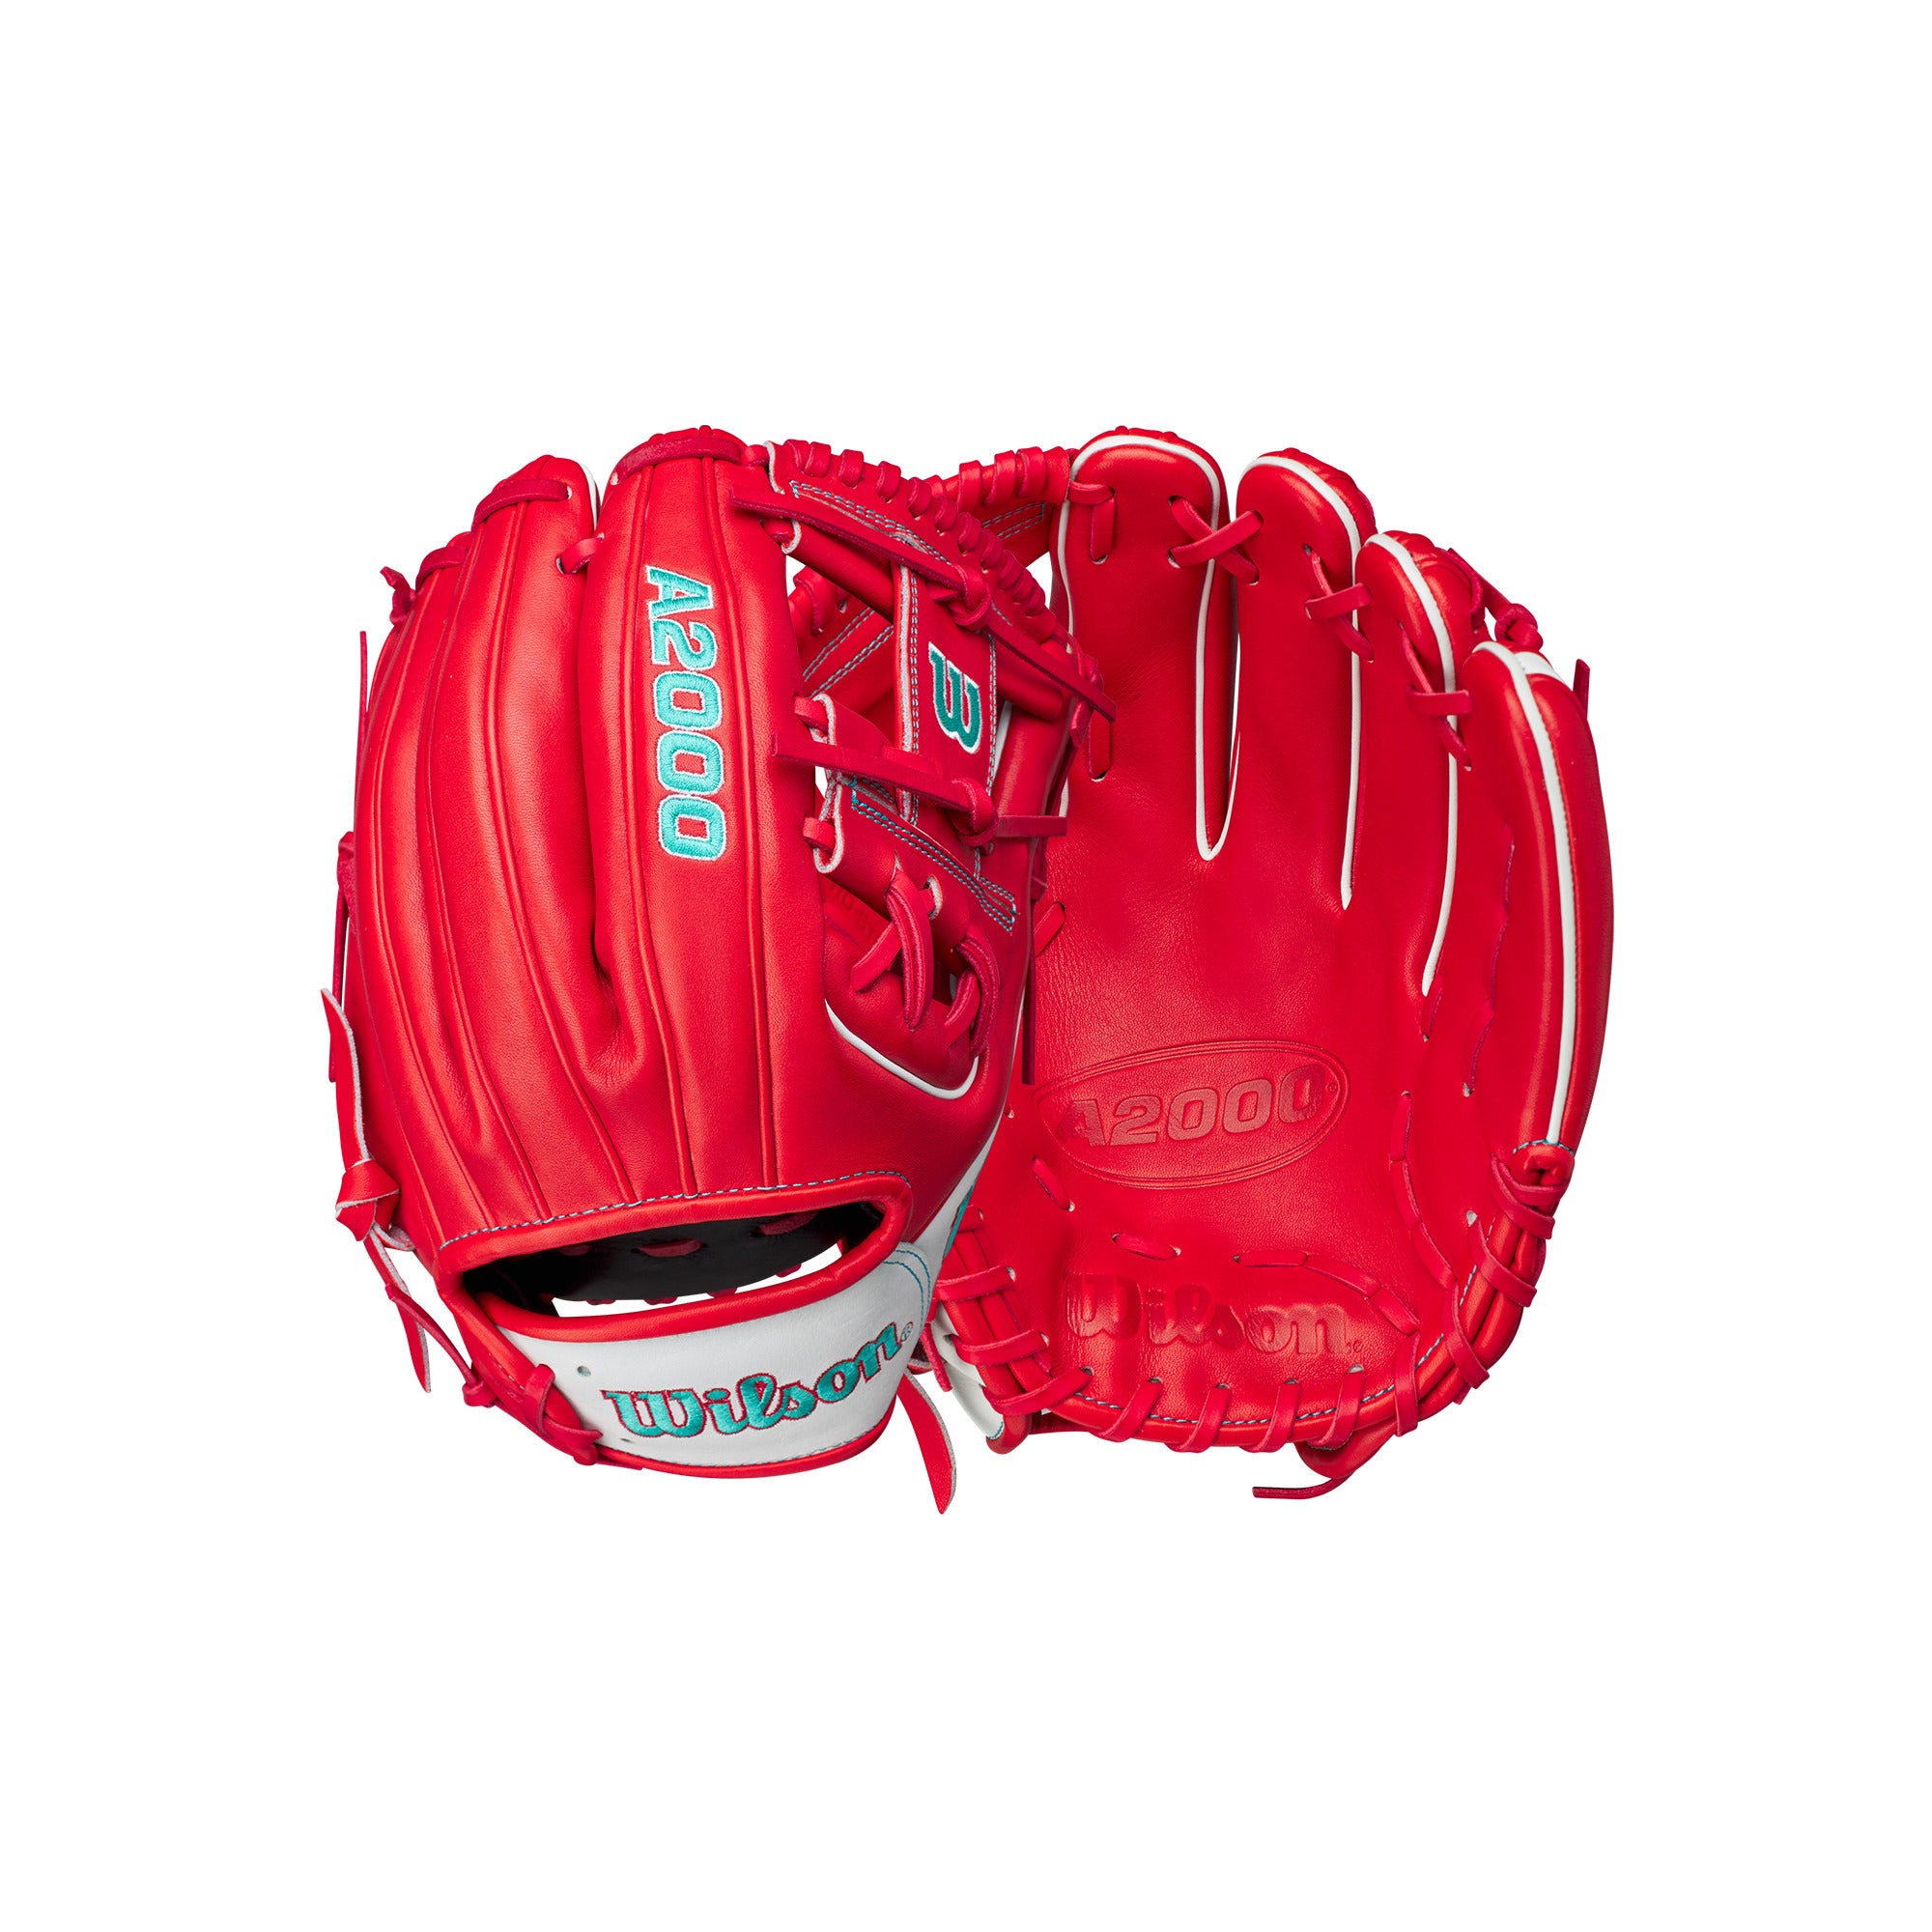 Limited Edition Wilson Custom Baseball Glove Options Until